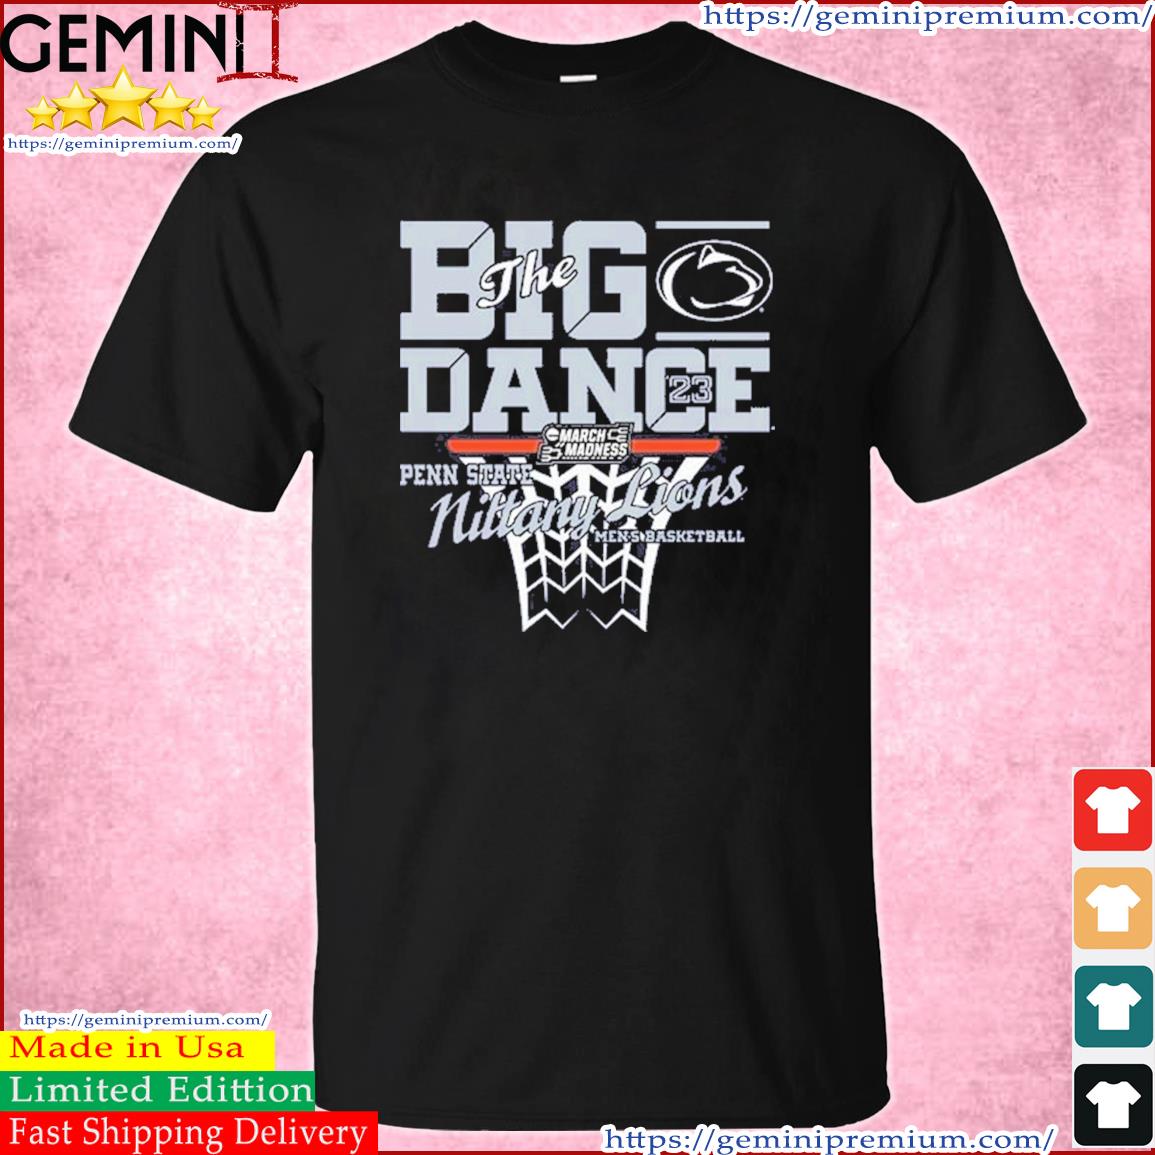 Penn State Men's Basketball 2023 NCAA March Madness Tournament Shirt